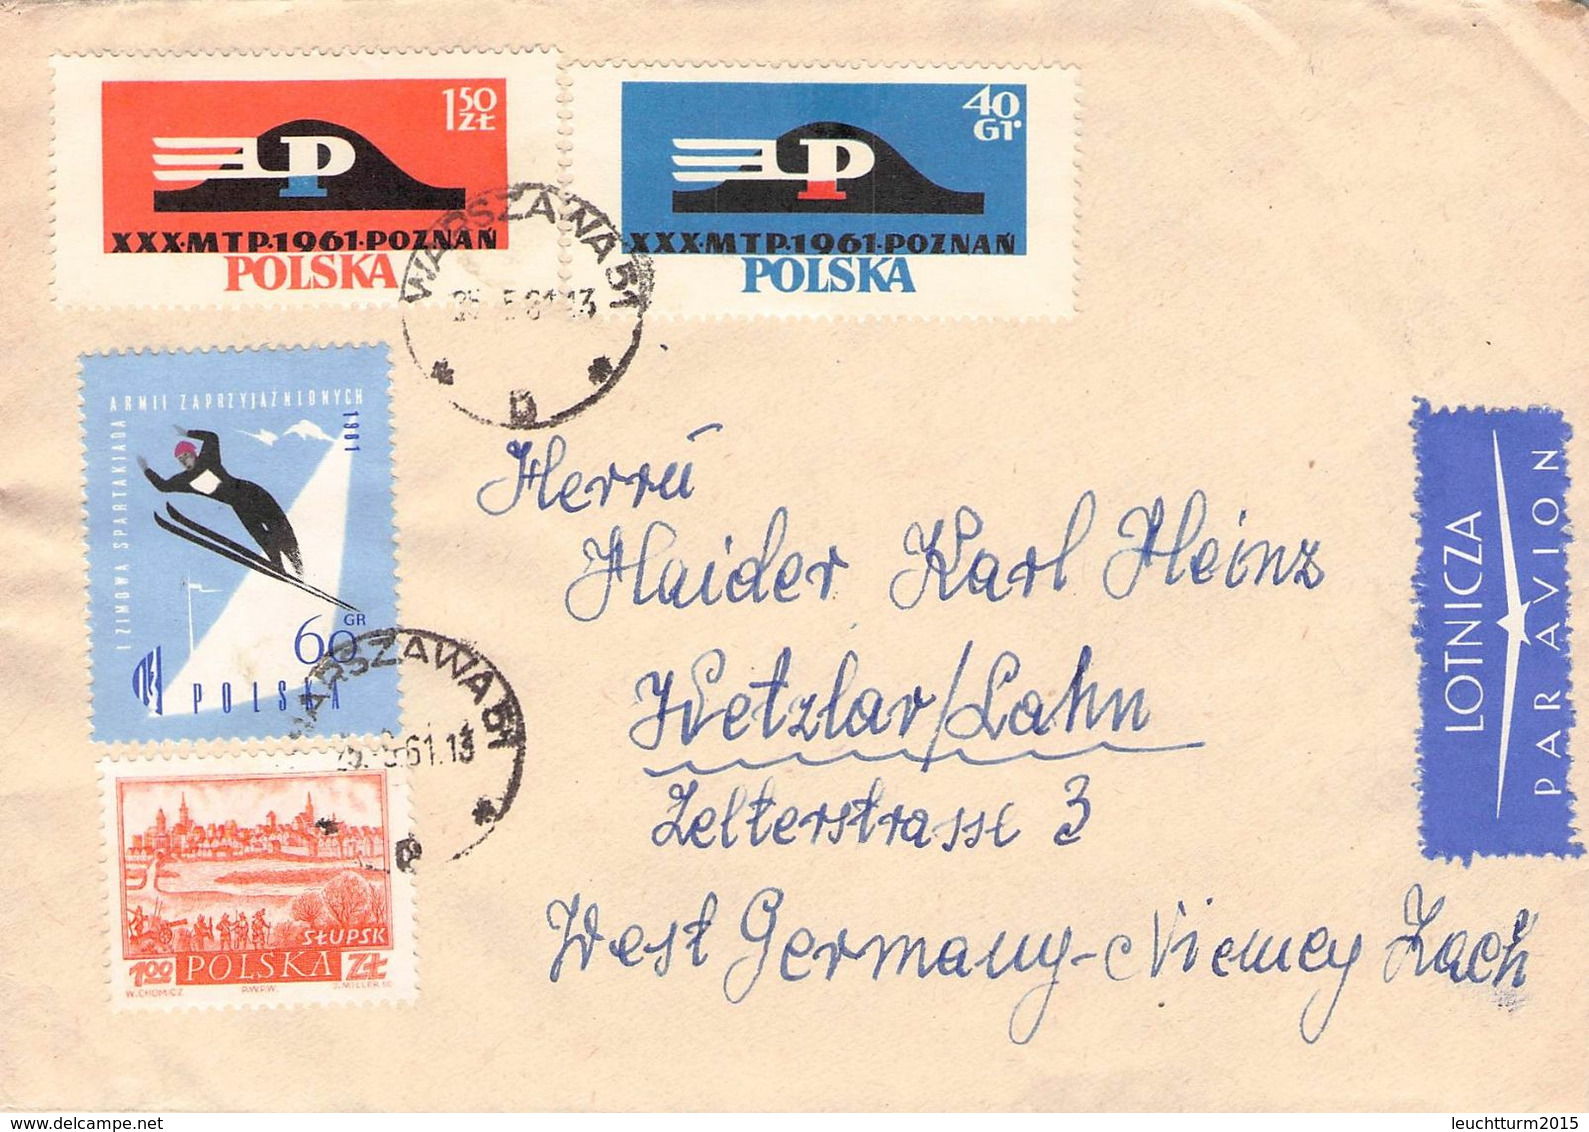 POLAND - LETTER 1961 WARSZAWA - WETZLAR/GERMANY /AS91 - Lettres & Documents